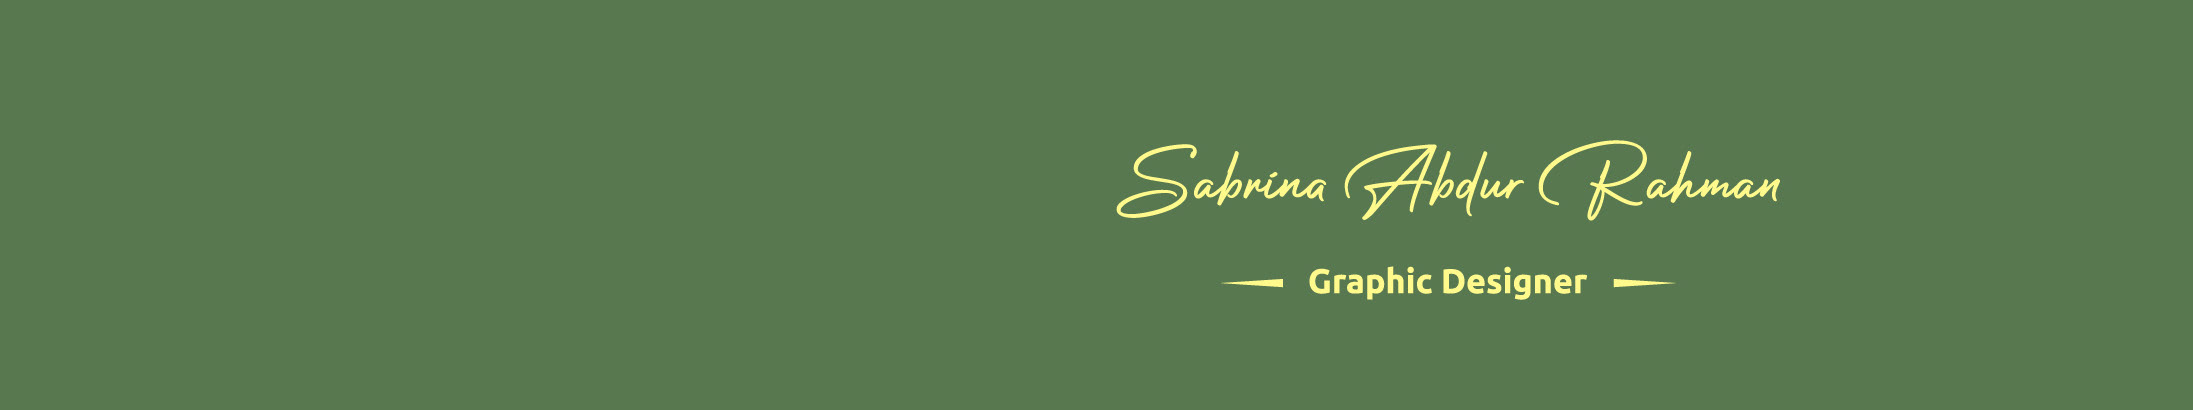 Banner de perfil de Sabrina Abdur Rahman